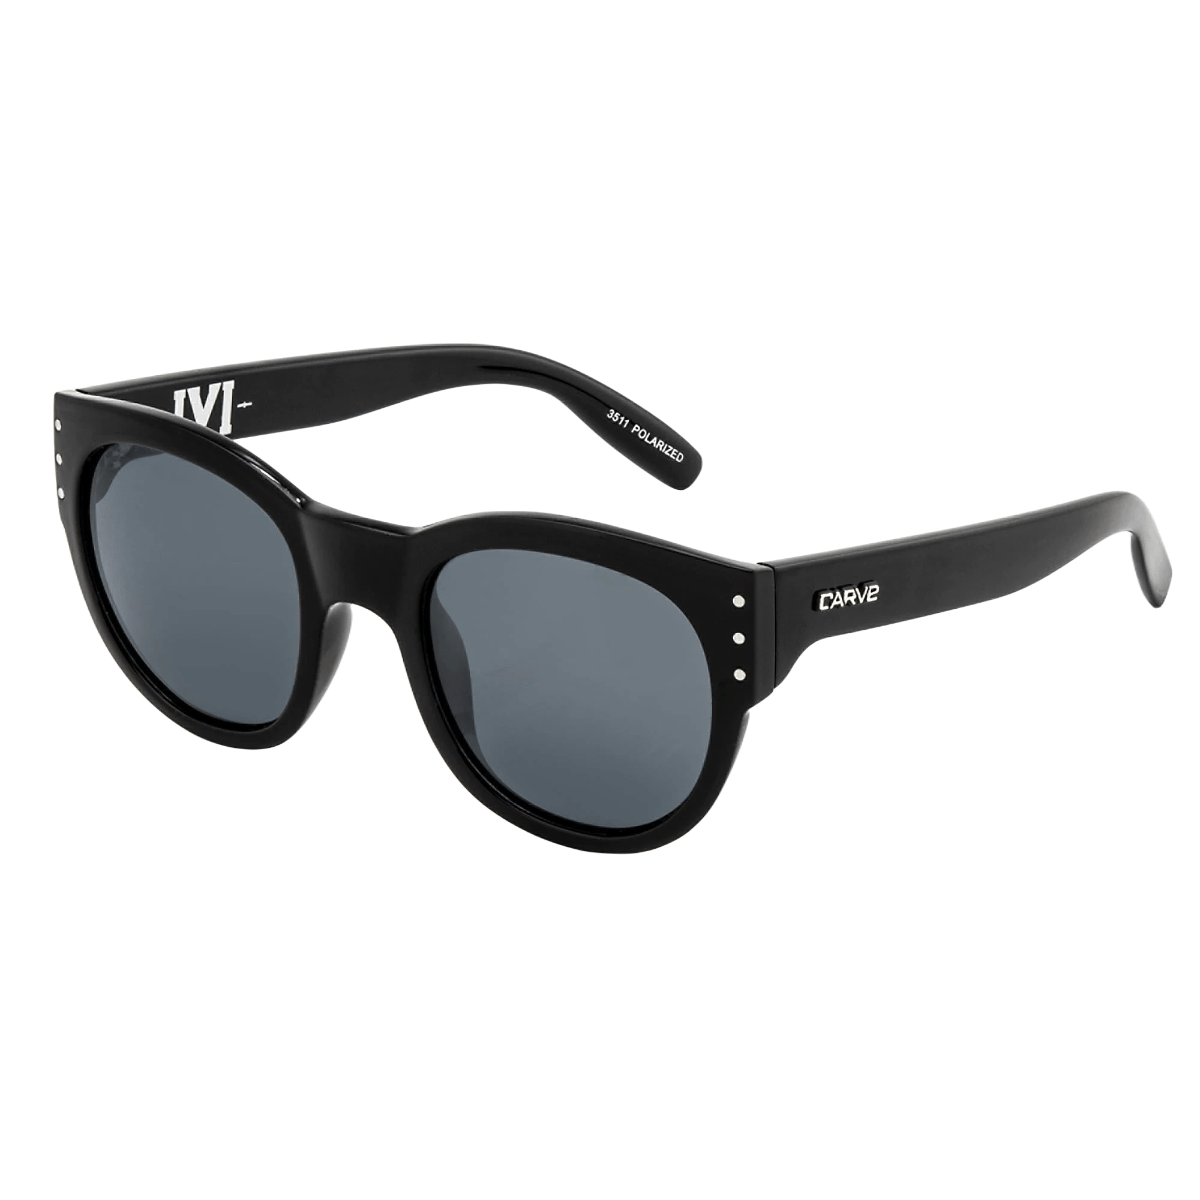 IVI Polarized Sunglasses Women's - Bobwards.com